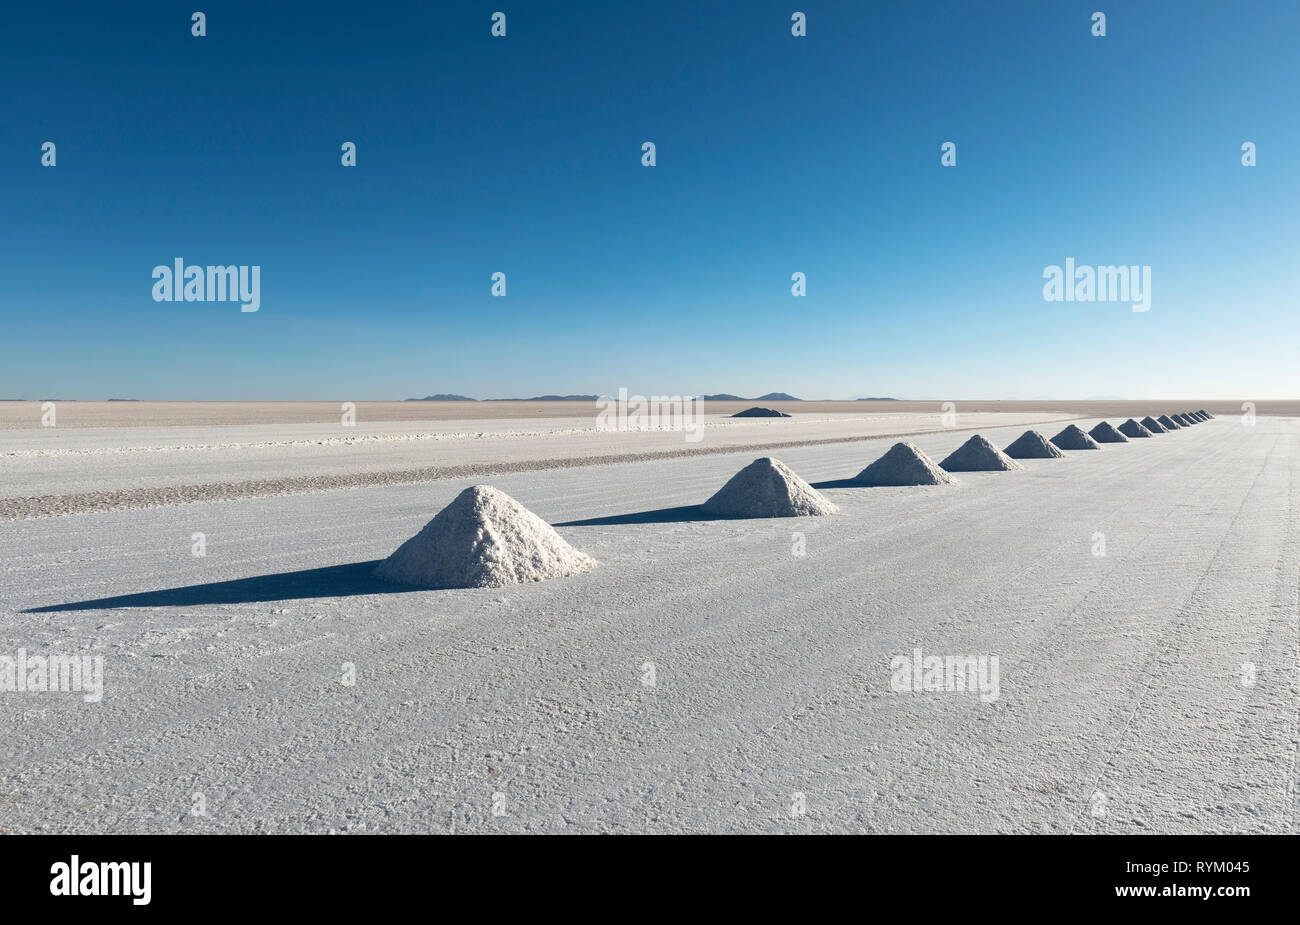 The salt pyramids of Colchani in the Salt Flat of Uyuni (Salar de Uyuni) where the salt is drying before further processing, Bolivia. Stock Photo